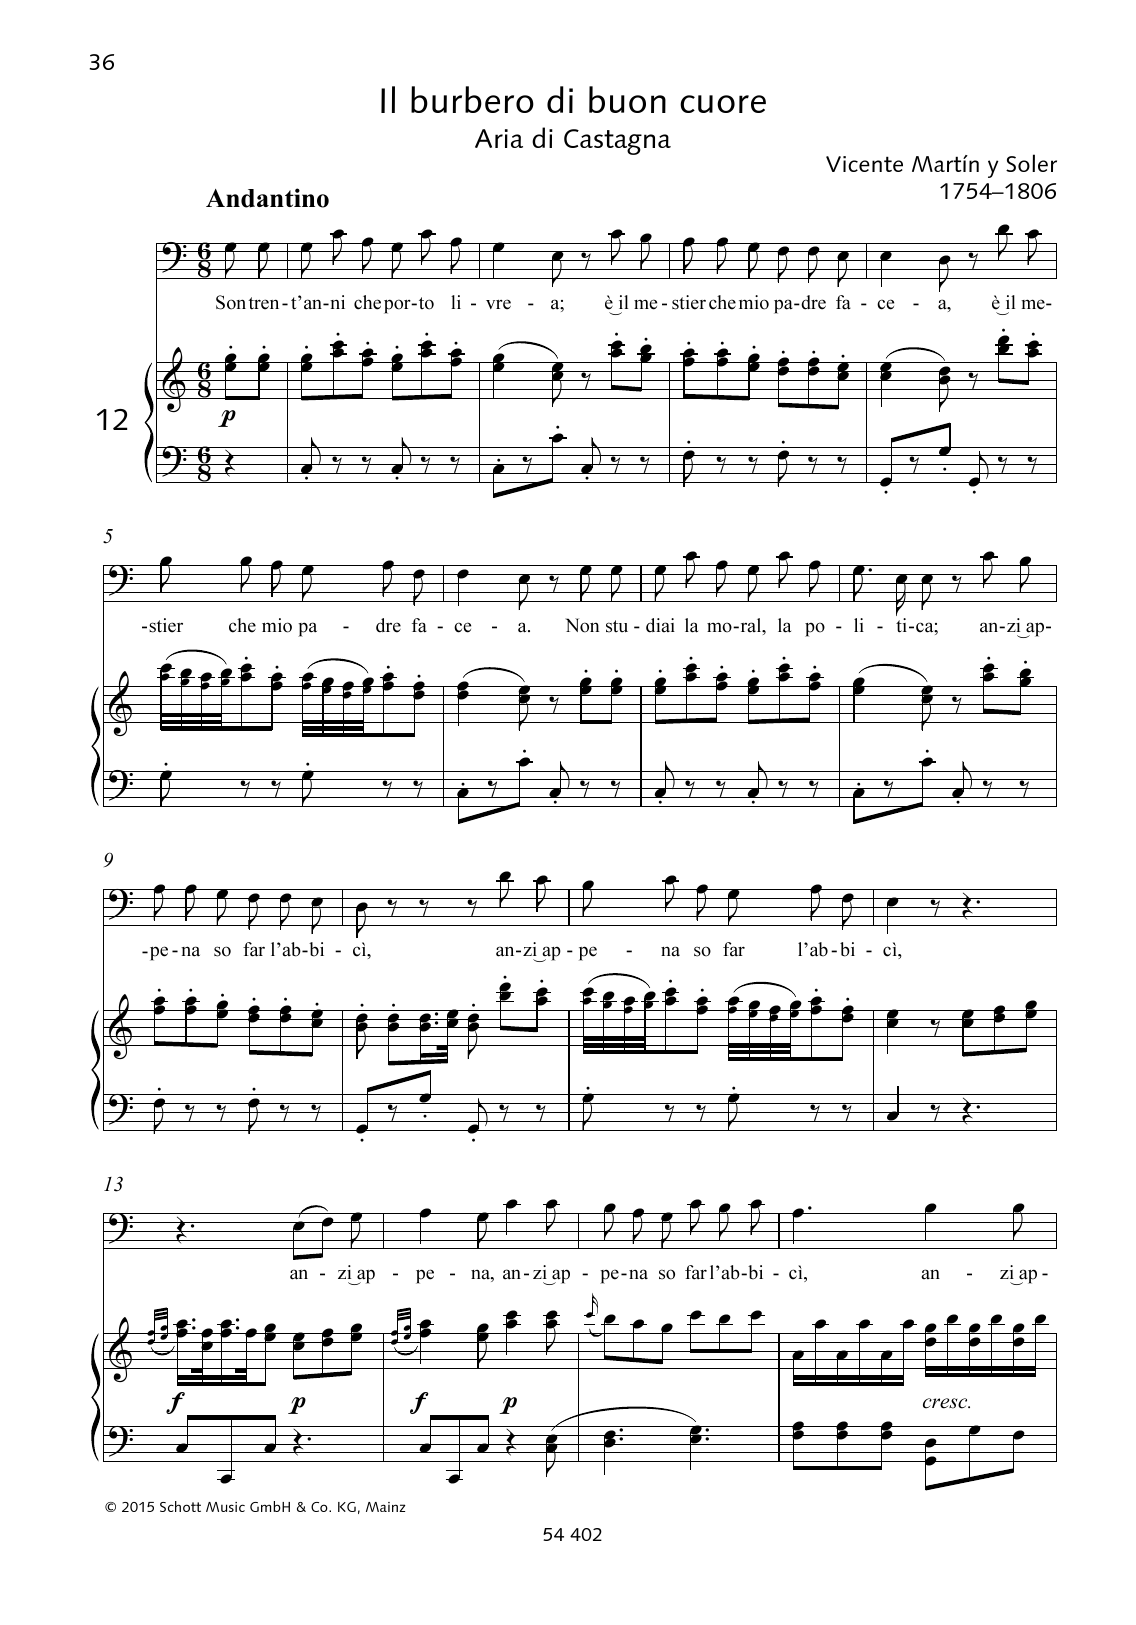 Vicente Martín y Soler Son trent'anni che porto livrea Sheet Music Notes & Chords for Piano & Vocal - Download or Print PDF